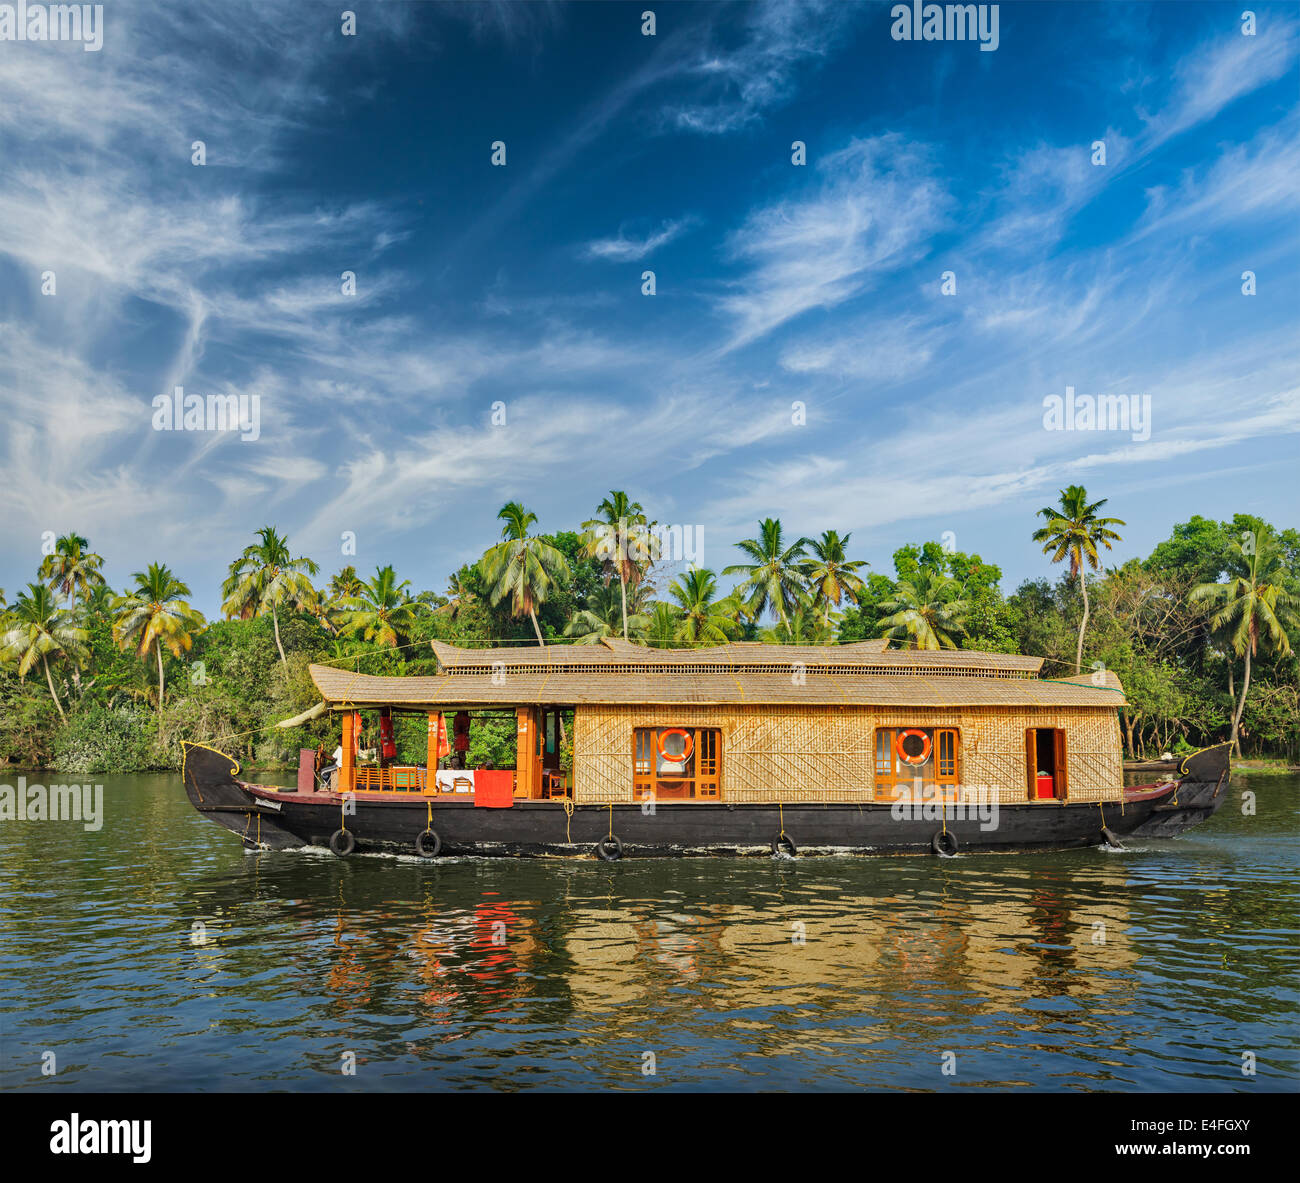 Travel tourism Kerala background - houseboat on Kerala backwaters. Kerala, India Stock Photo